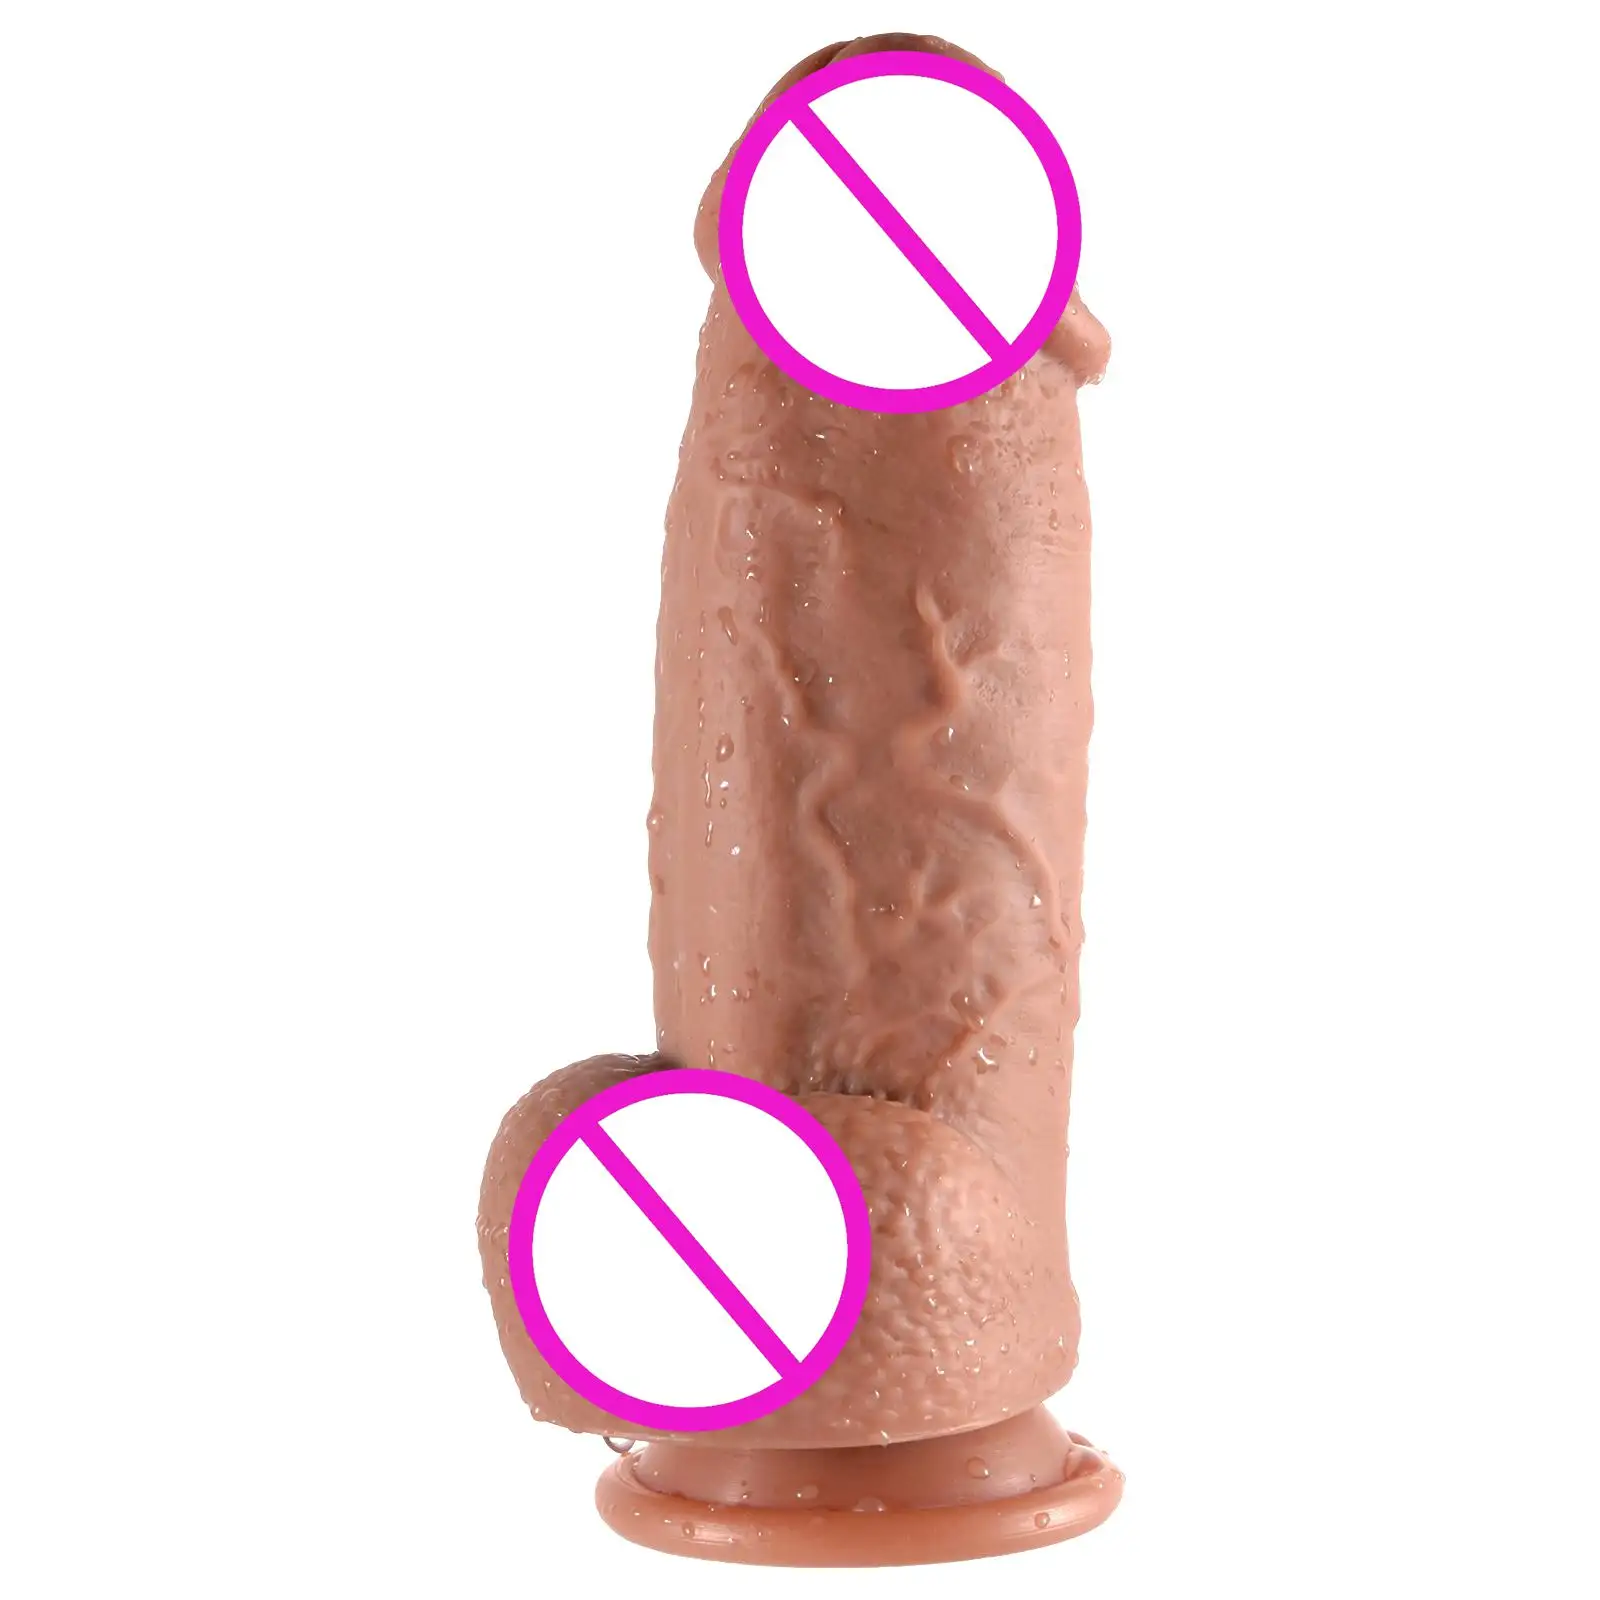 Dia 5.8cm Super Thick Silicone Huge Dildo Vagina G-spot Stimulation Artificial Penis For Women Men Compatible With Sex Machine